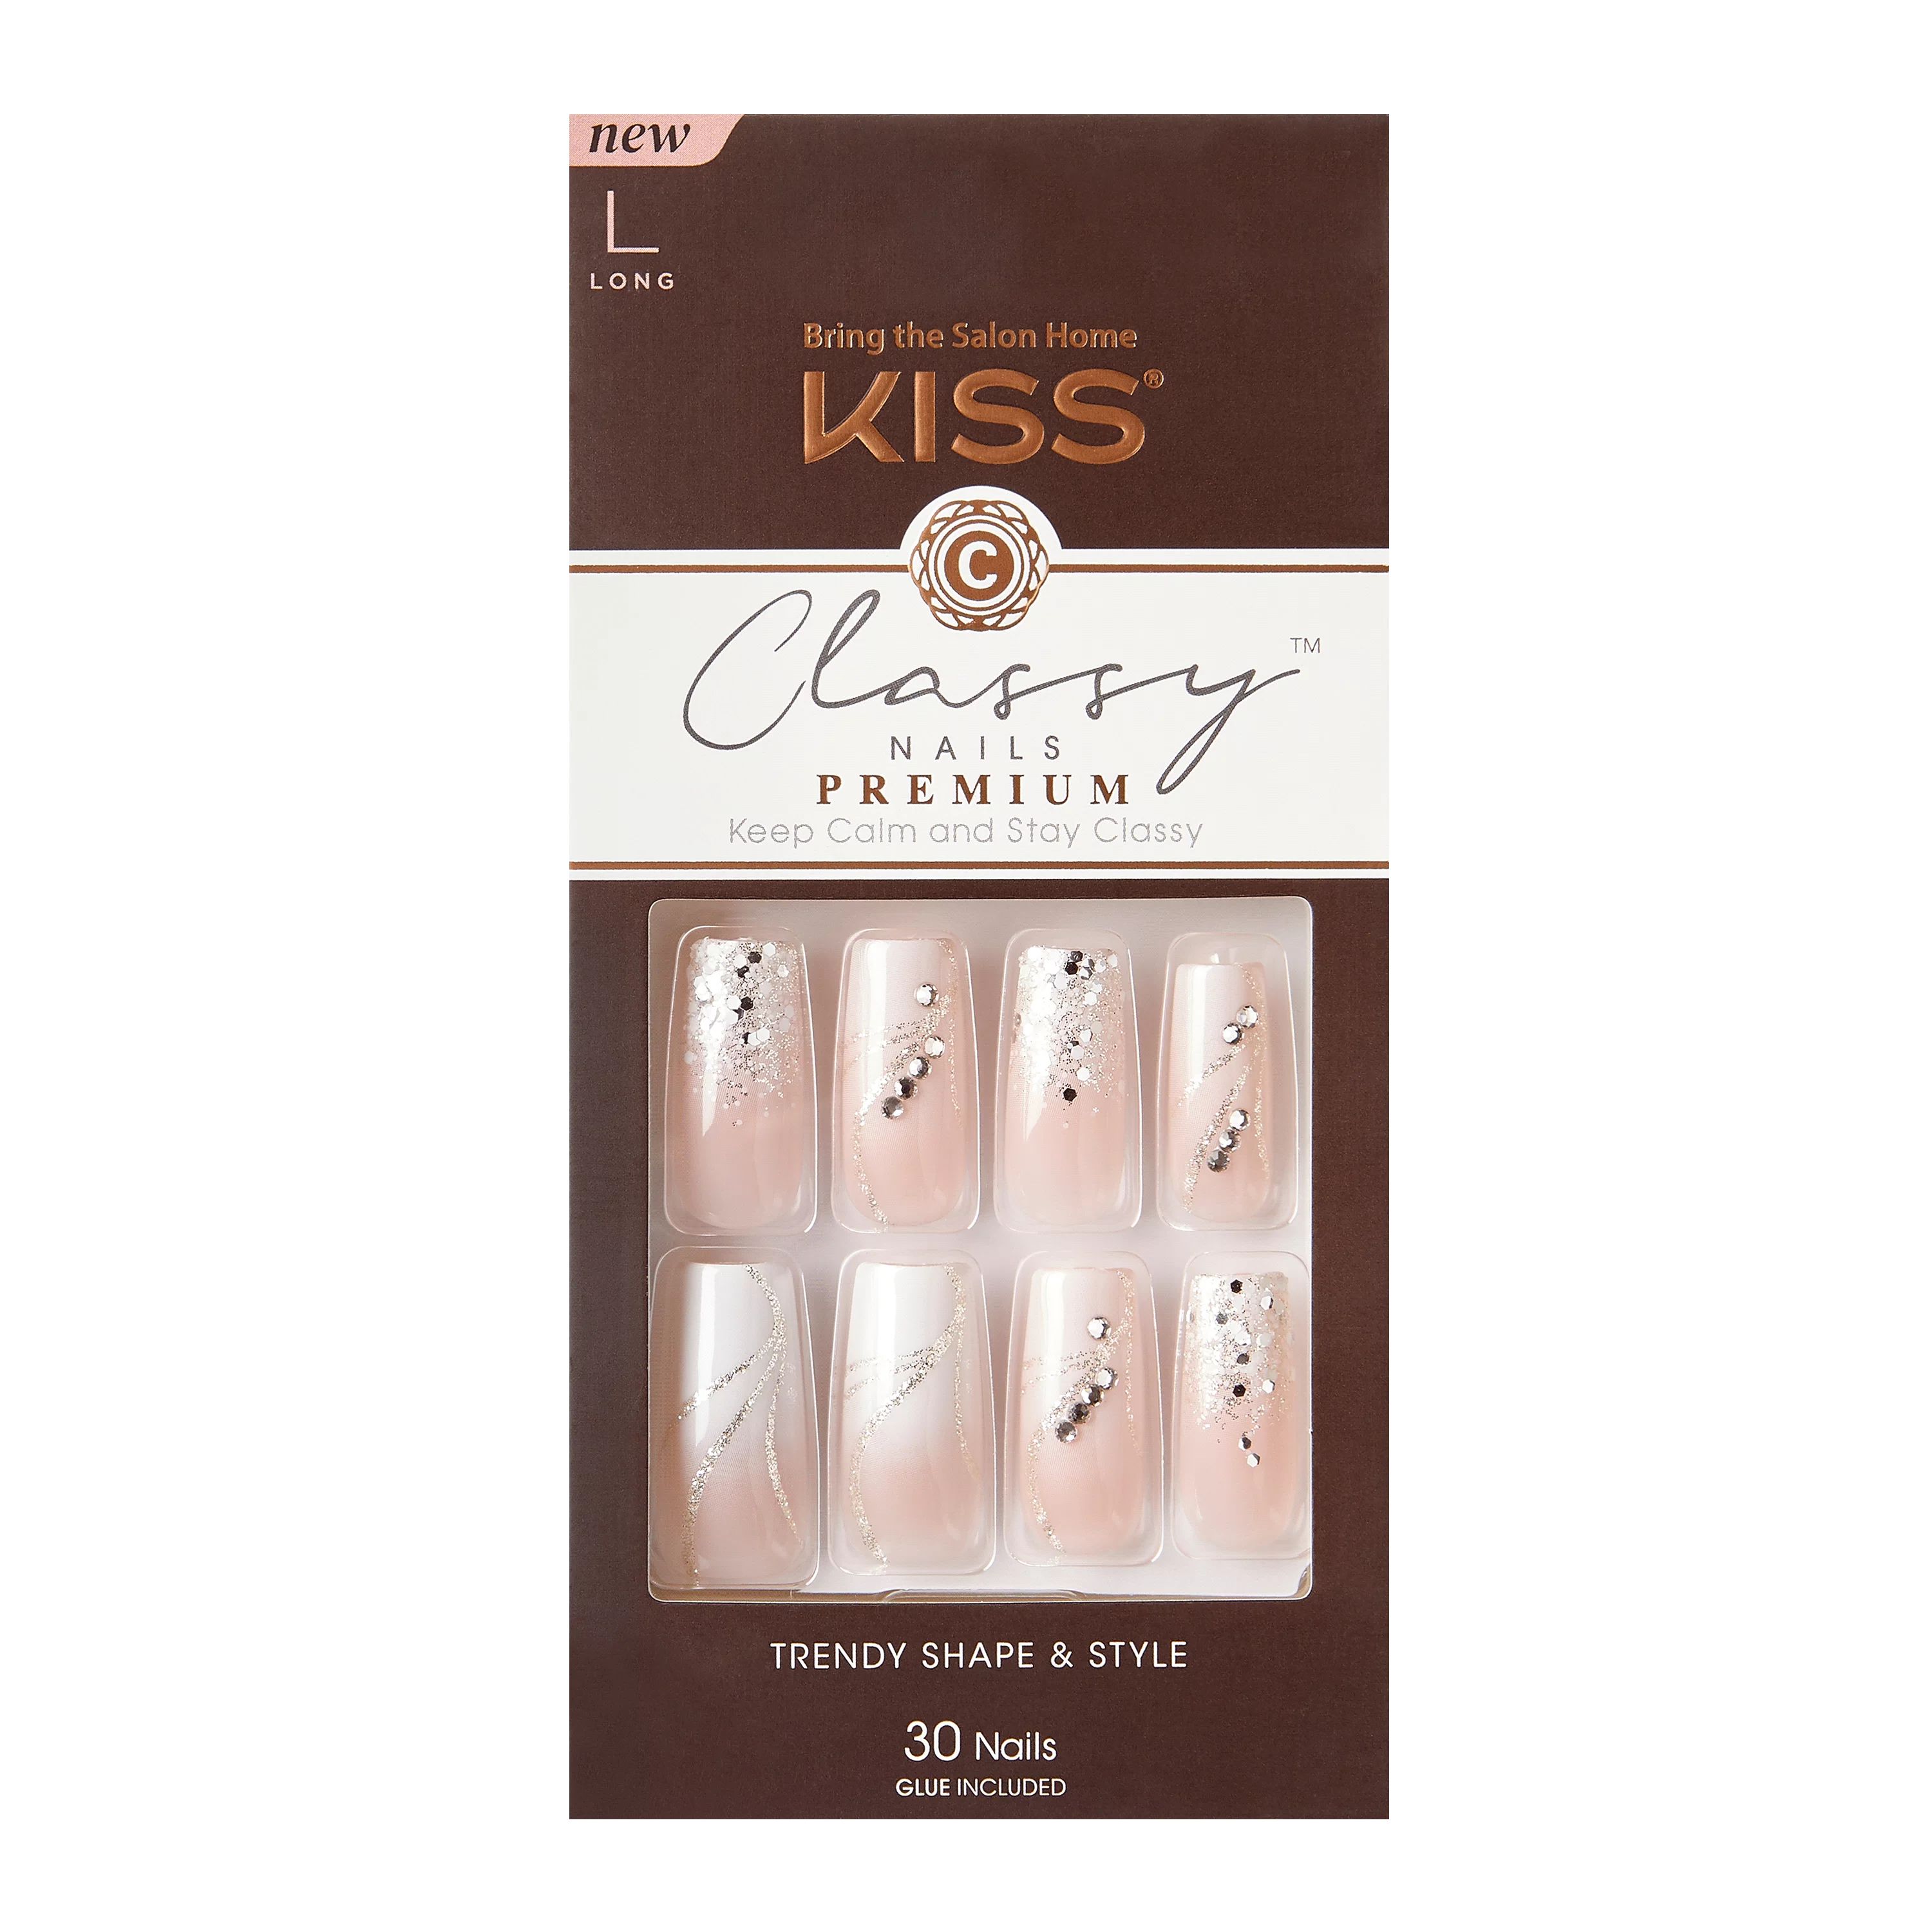 KISS Classy Premium Fake Nails, Stunning!, 30 Count | Walmart (US)